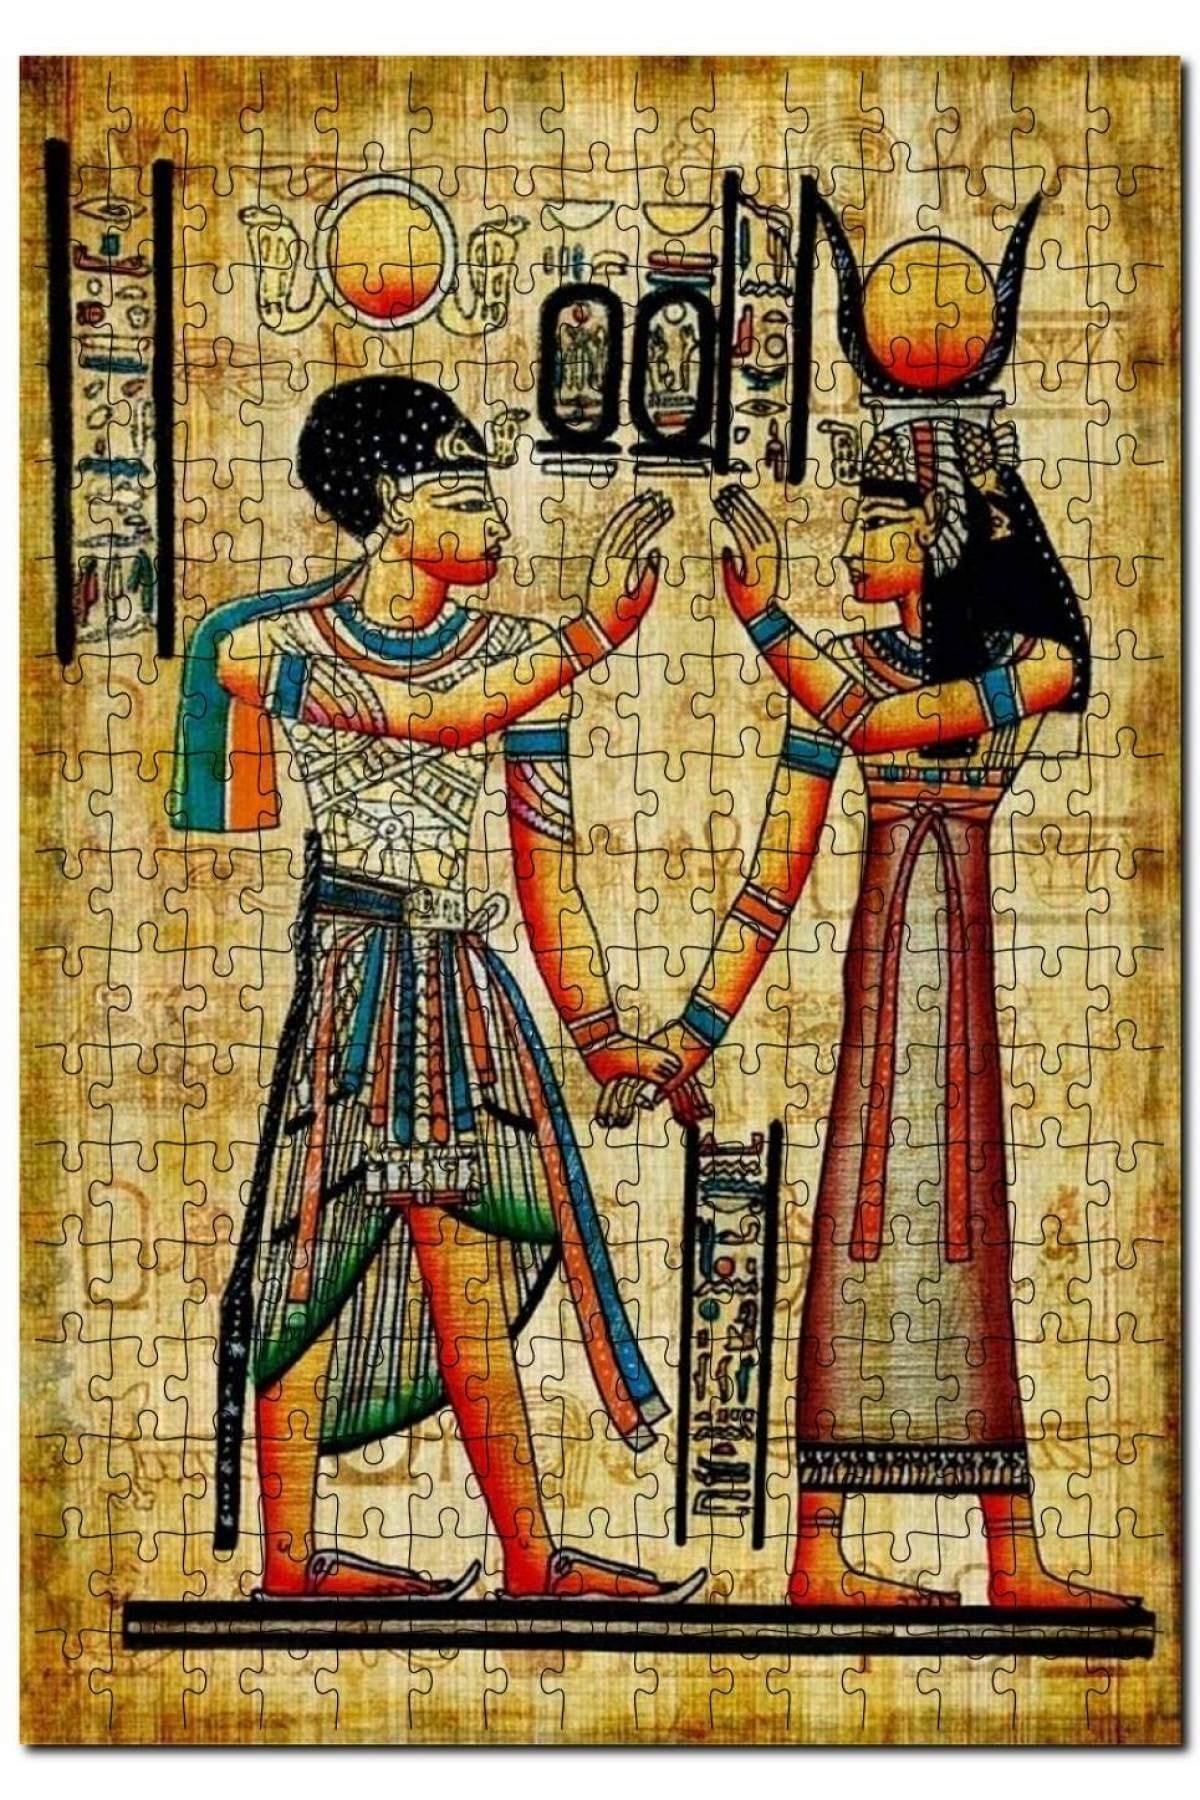 Cakapuzzle Antik Mısır Papyrus Thema Görseli 1000 Parça Puzzle Yapboz Mdf (AHŞAP)